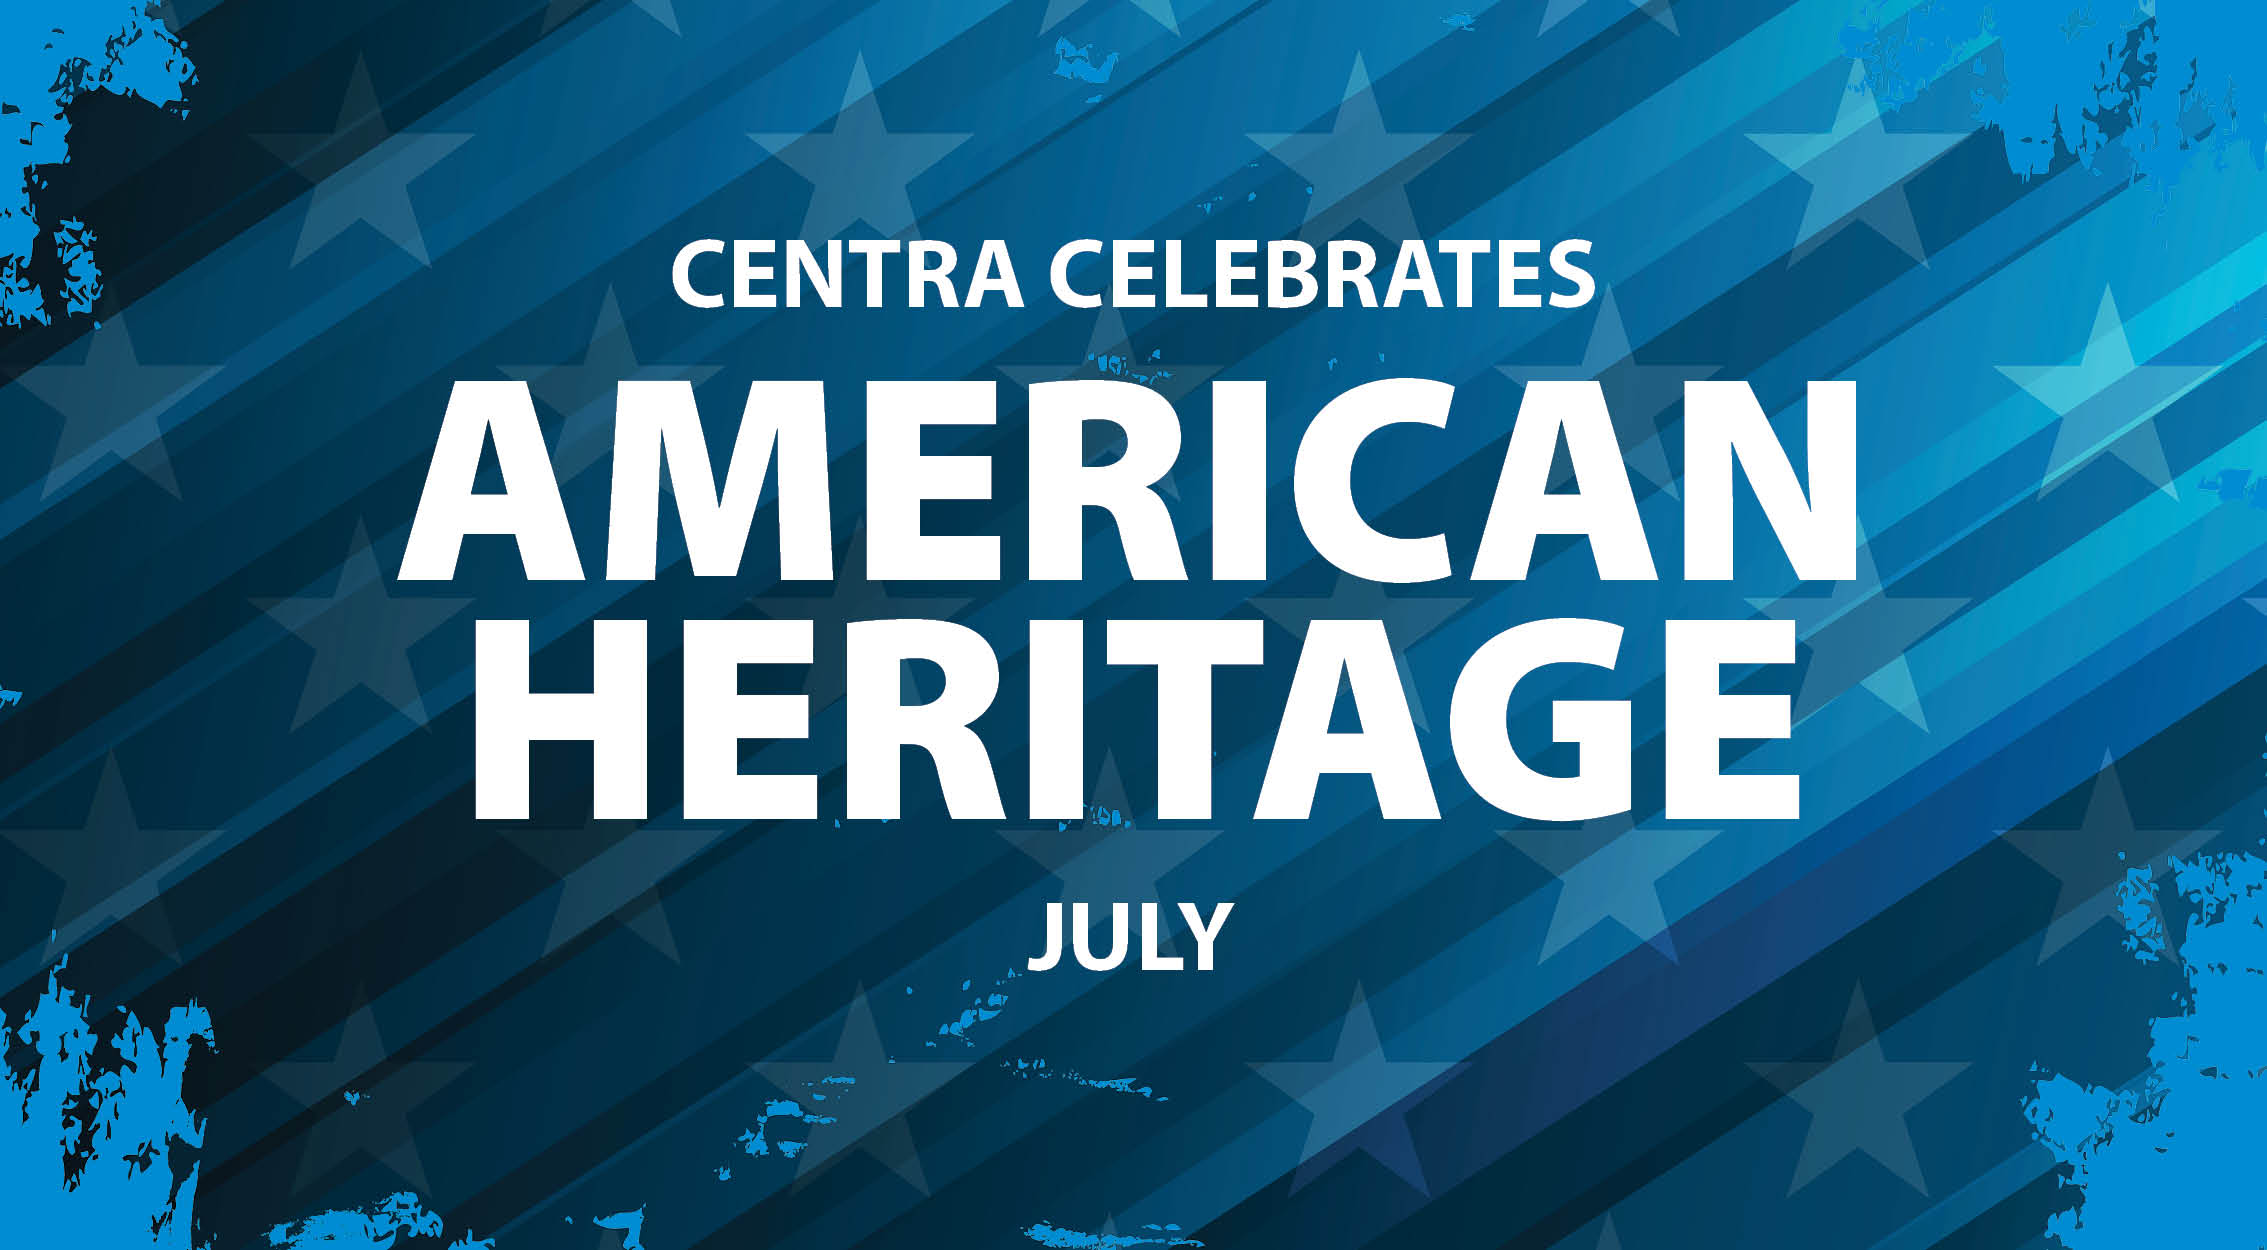 Centra celebrates American Heritage